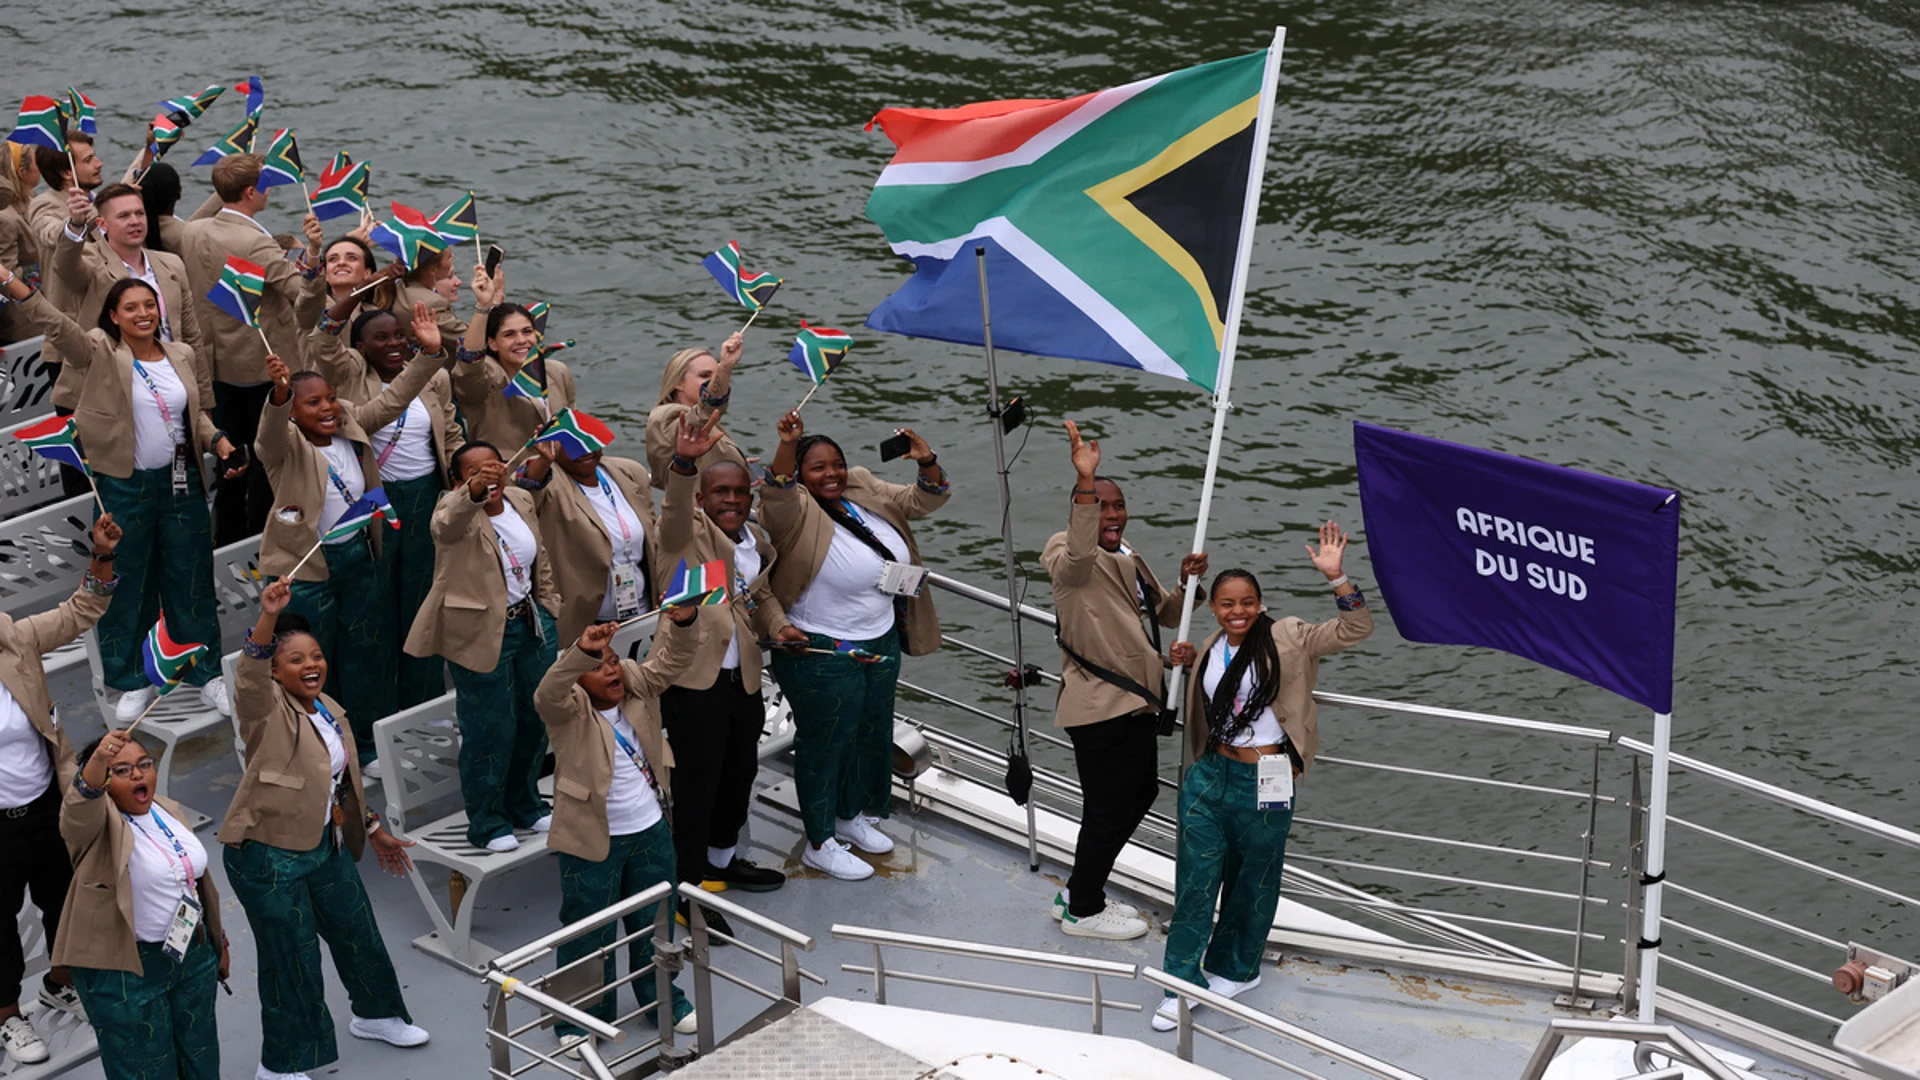 LET THE GAMES BEGIN: Historic river parade, Dion magic ignite Paris Olympics